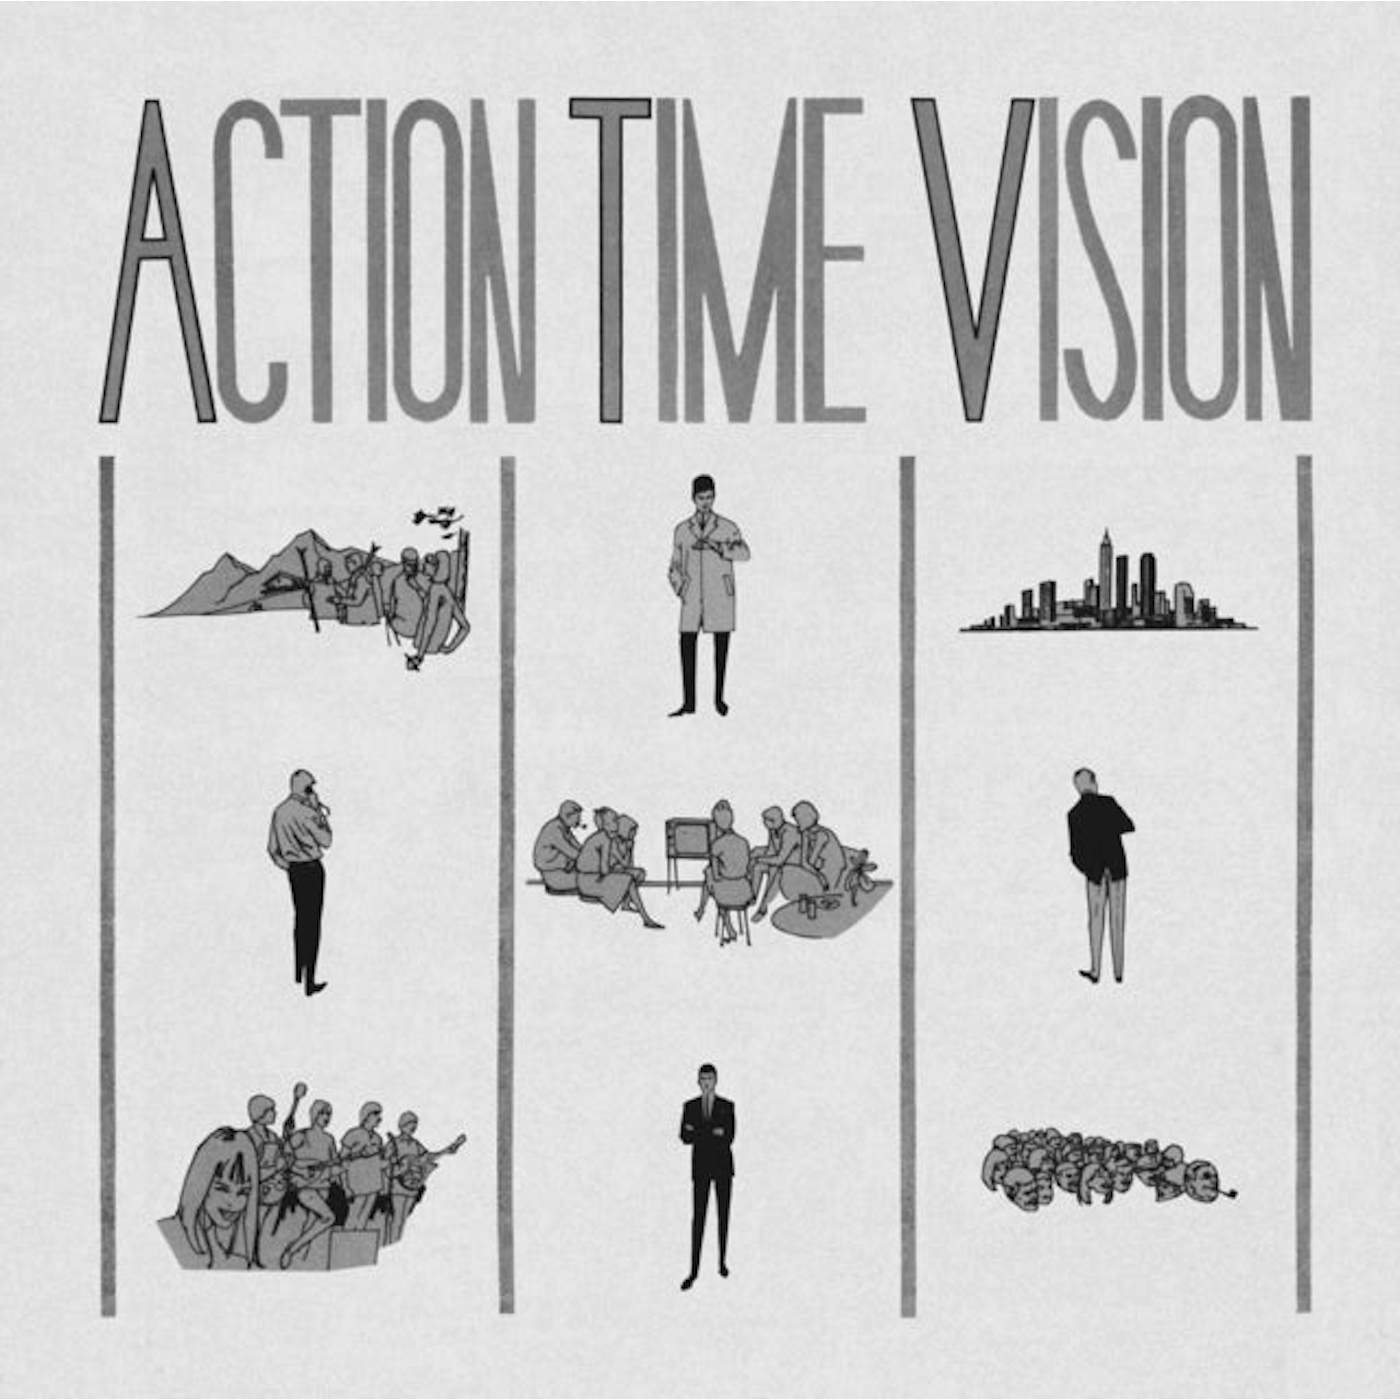 Alternative Tv LP Vinyl Record - Action Time Vision 19 77-19 79